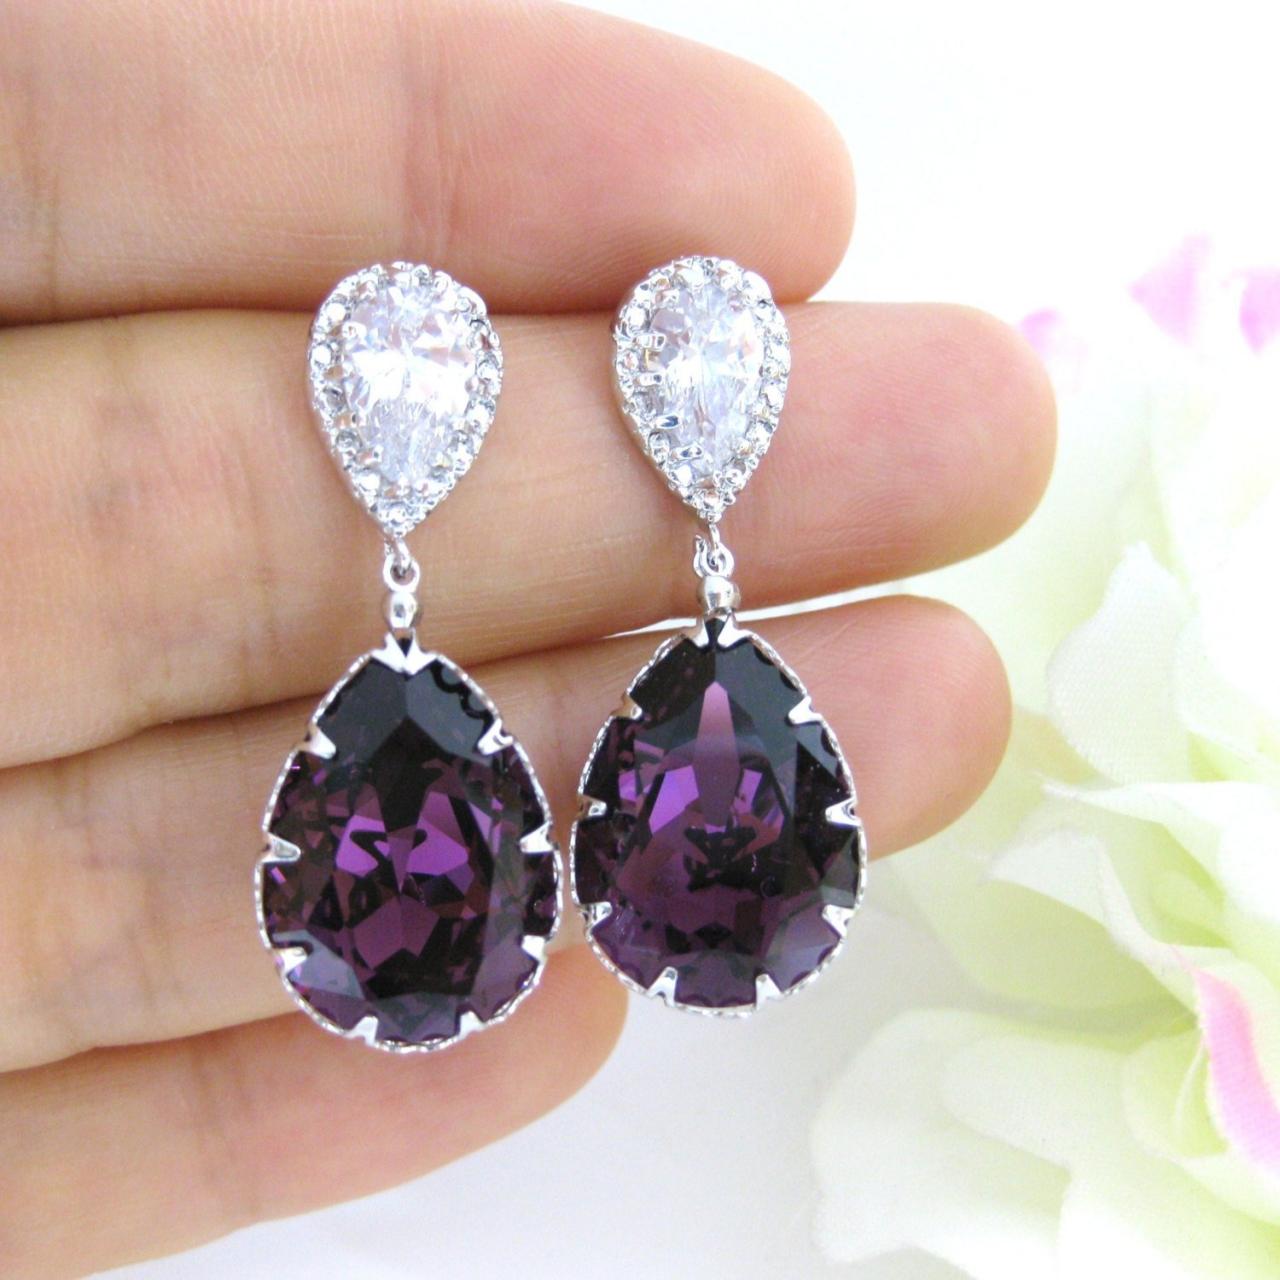 Purple Crystal Earrings Amethyst Teardrop Earrings Swarovski Crystal Cubic Zirconia Earrings Bridesmaid Gift Wedding Earrings (e146)